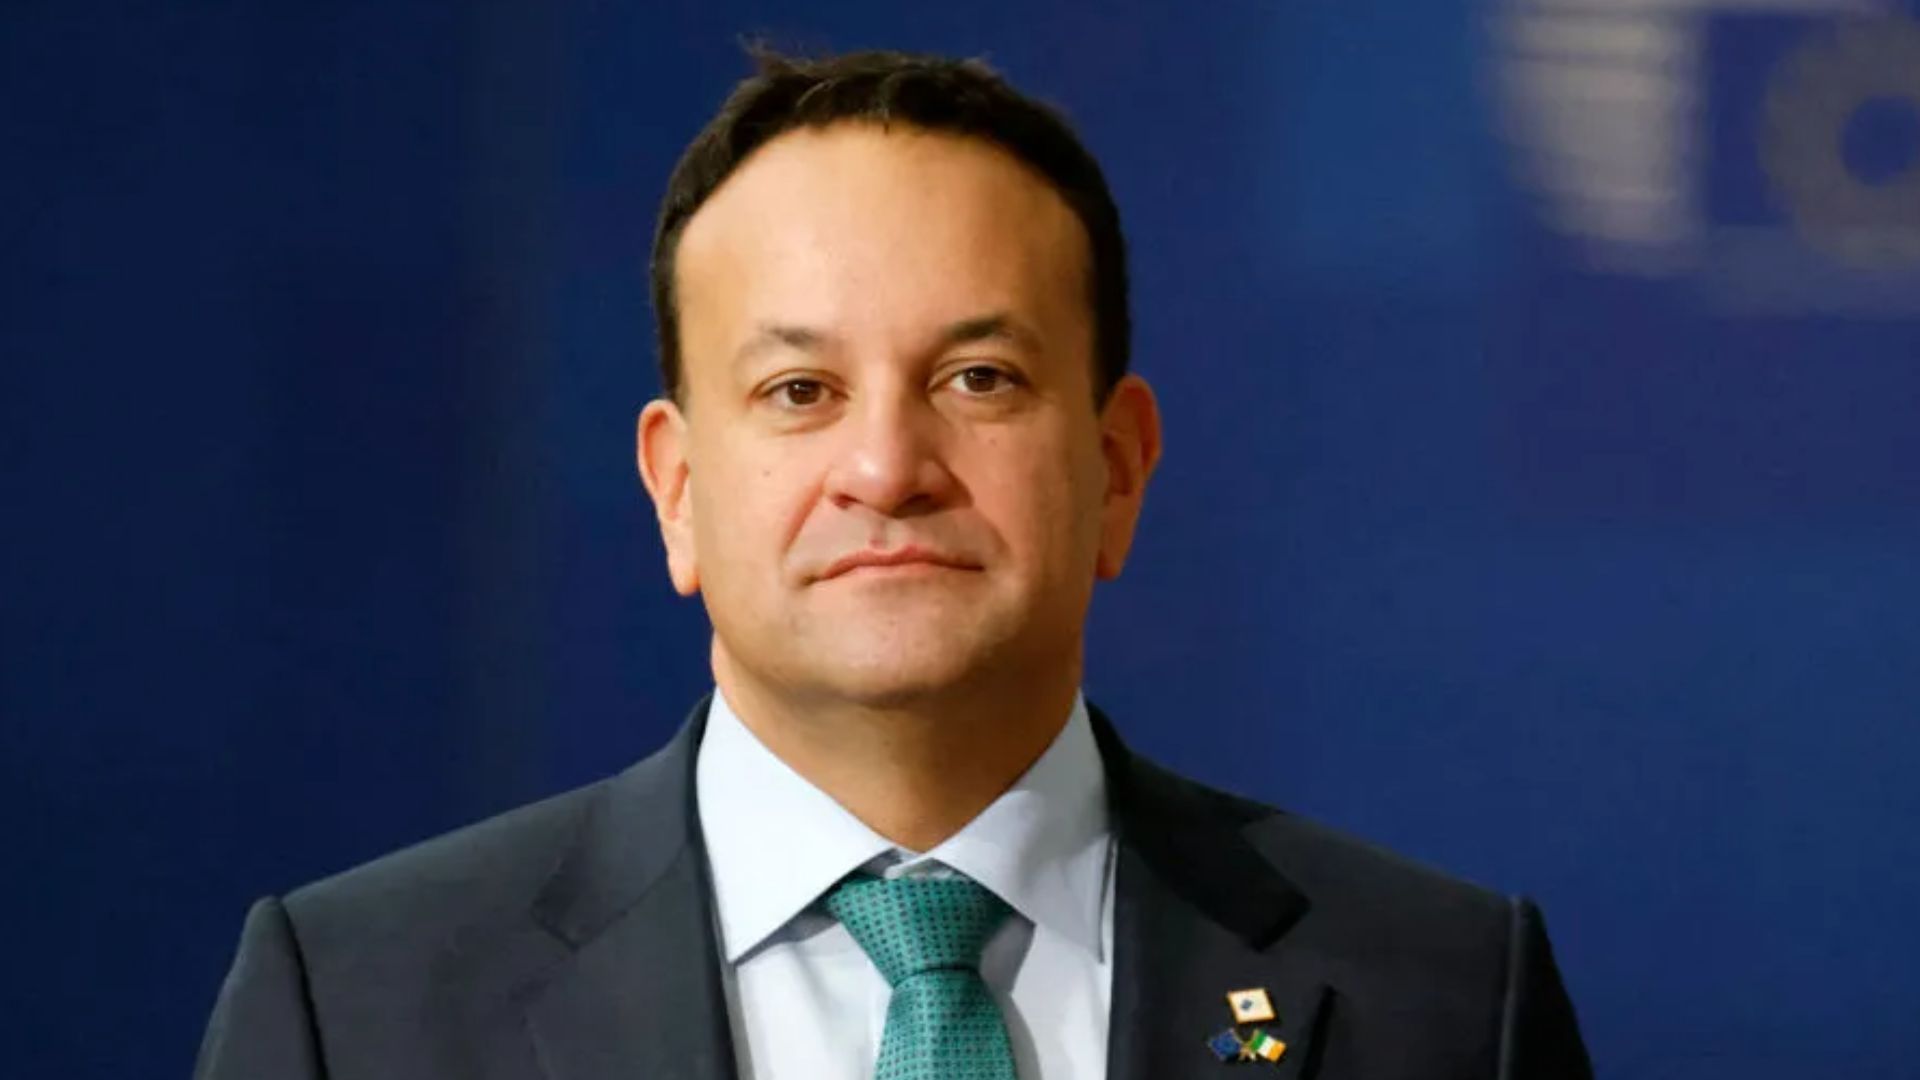 Leo Varadkar announces resignation as Ireland’s Prime Minister